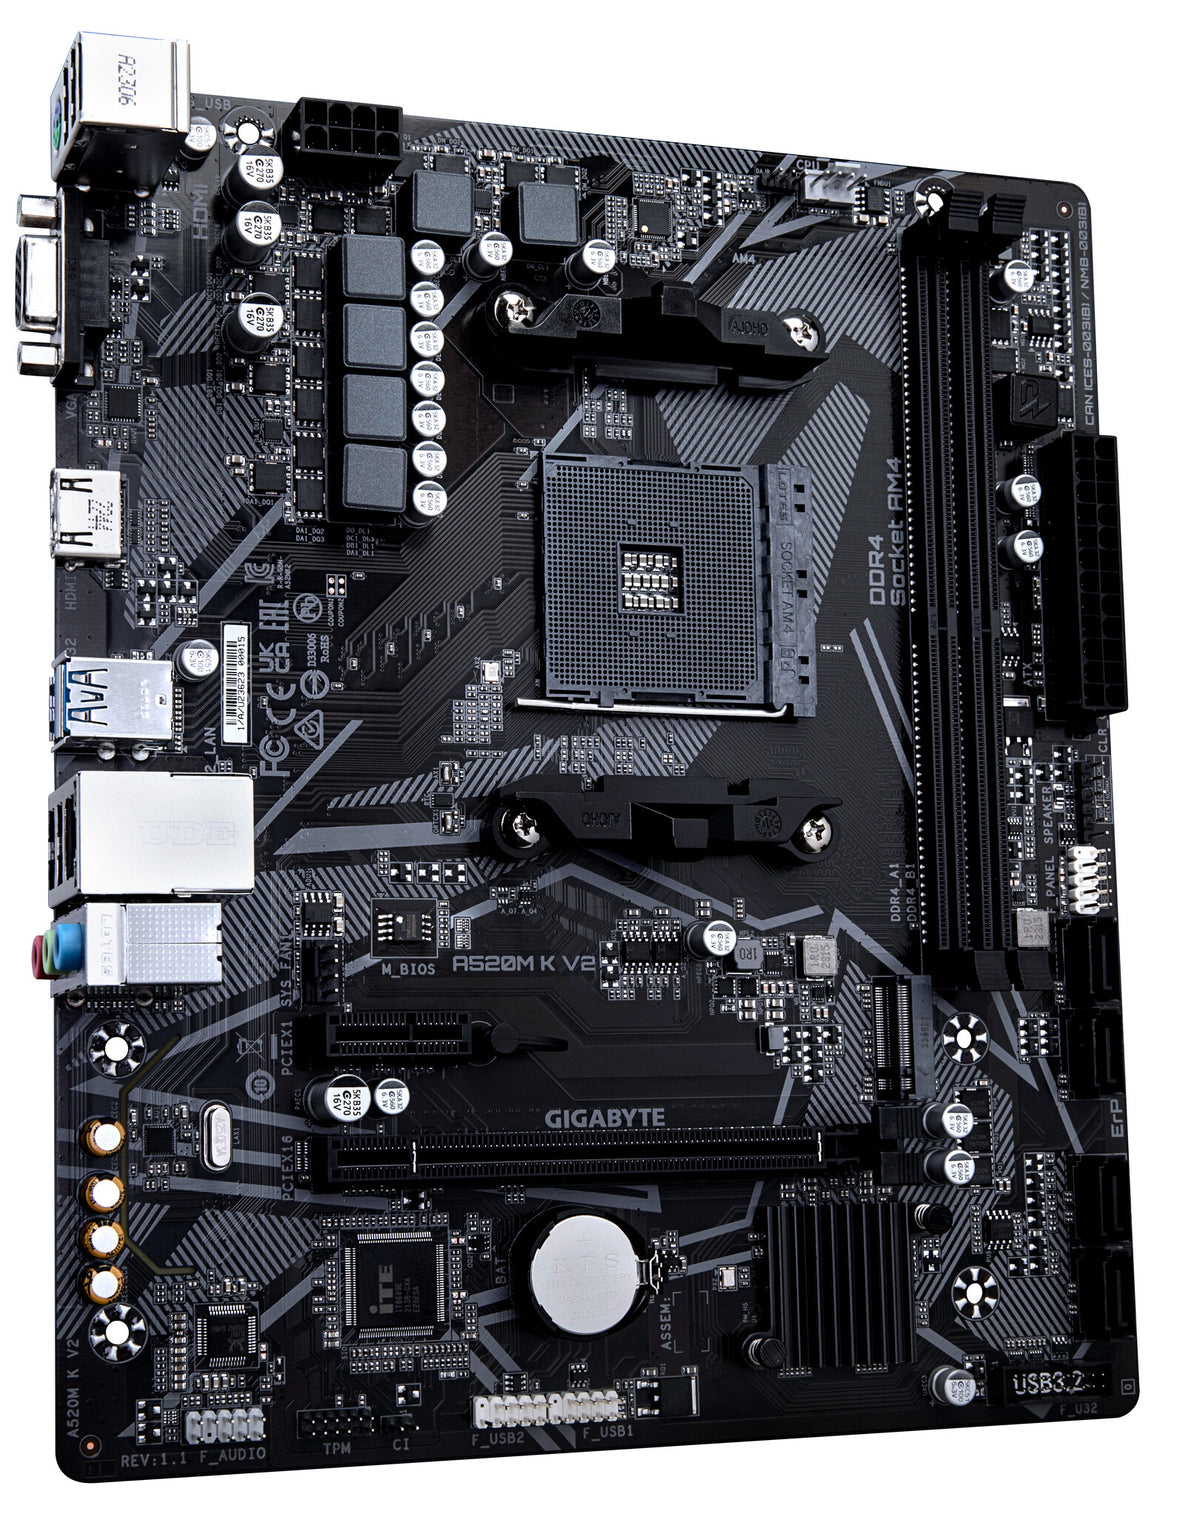 Gigabyte A520M K V2 -  AMD AM4 Socket Micro ATX Motherboard